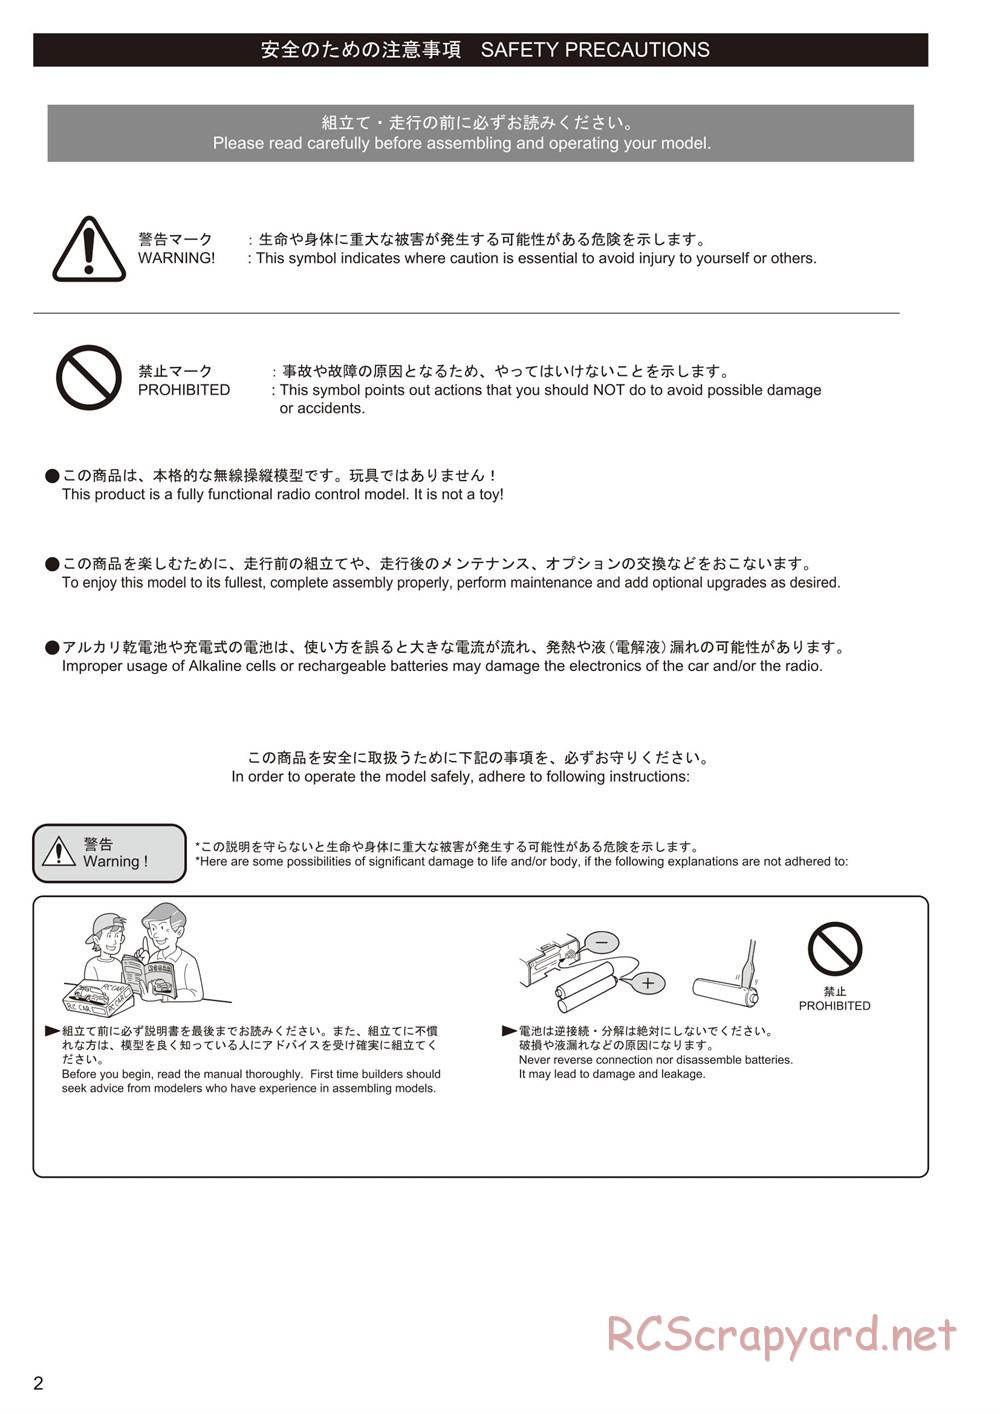 Kyosho - Lazer ZX-6 - Manual - Page 2